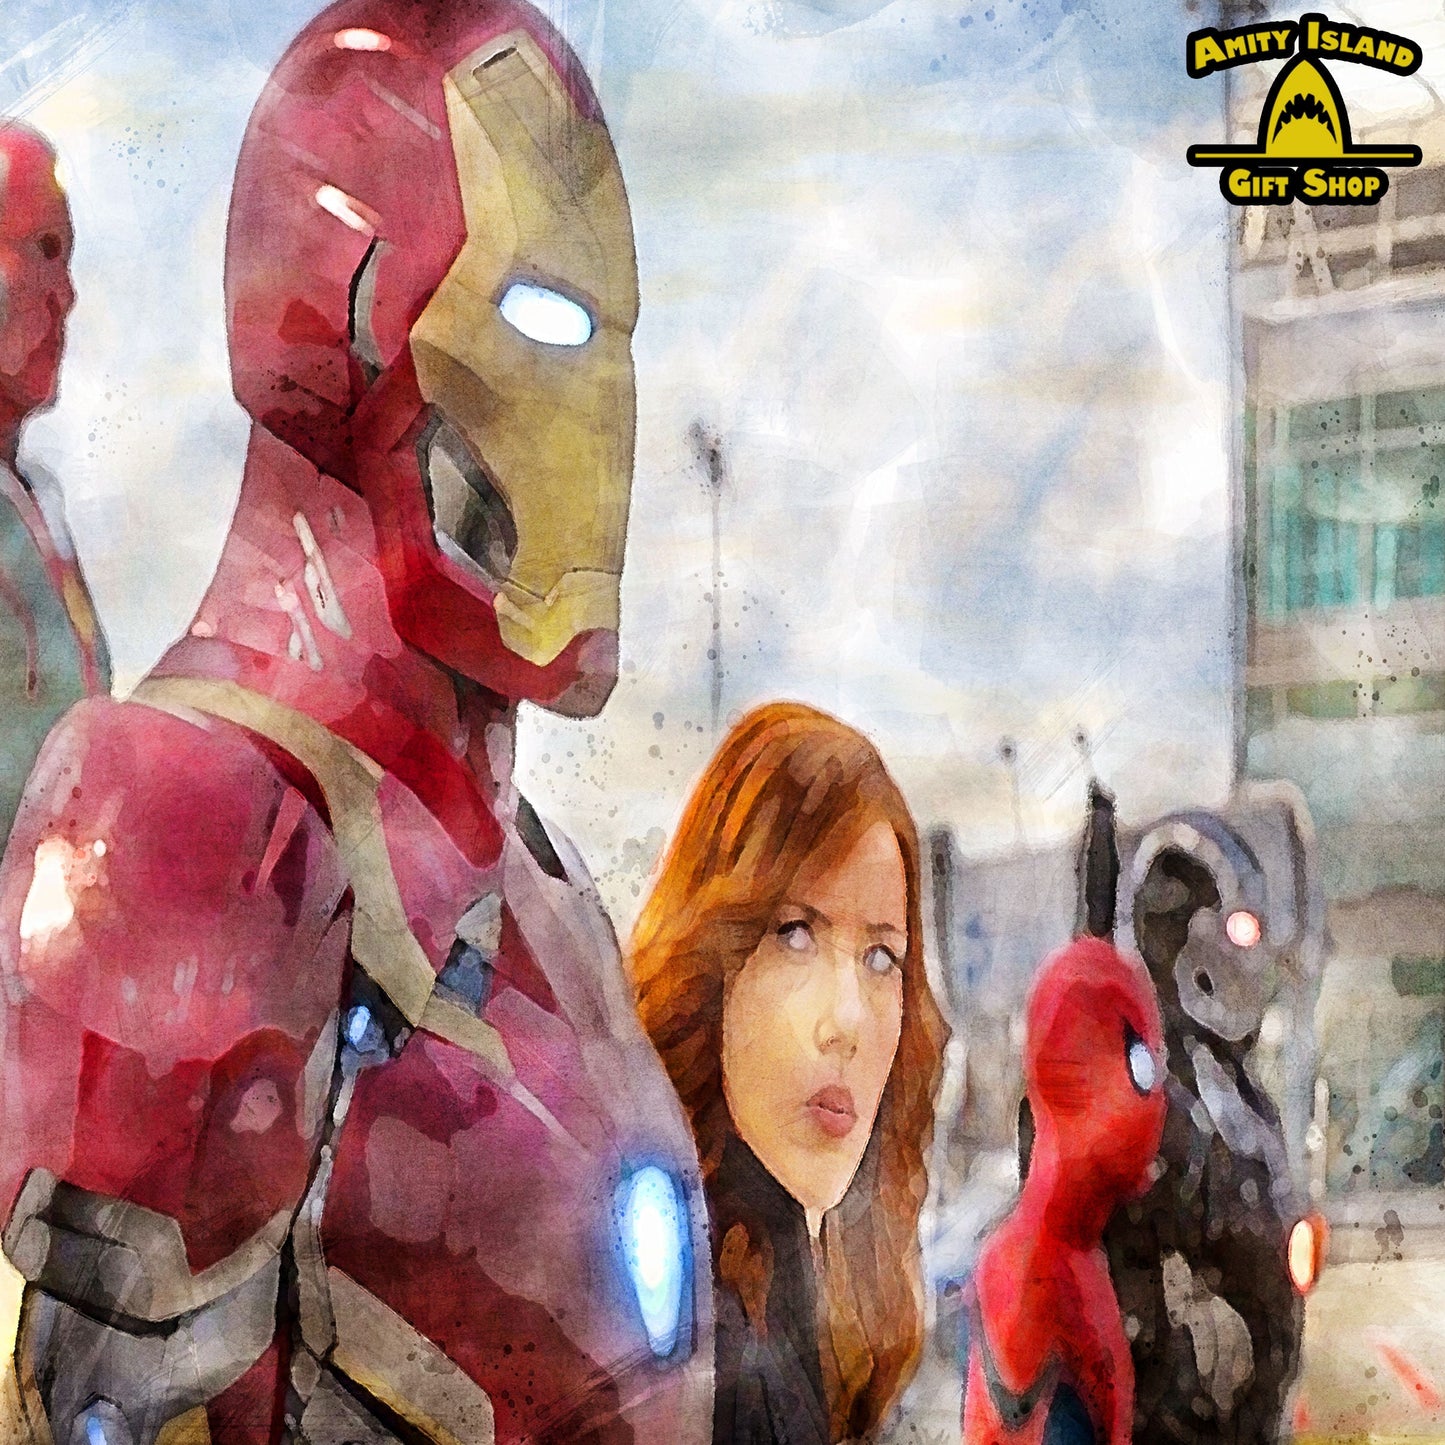 MCU Civil War Inspired - Team Iron Man vs Team Captain America - 13x38 Art Print